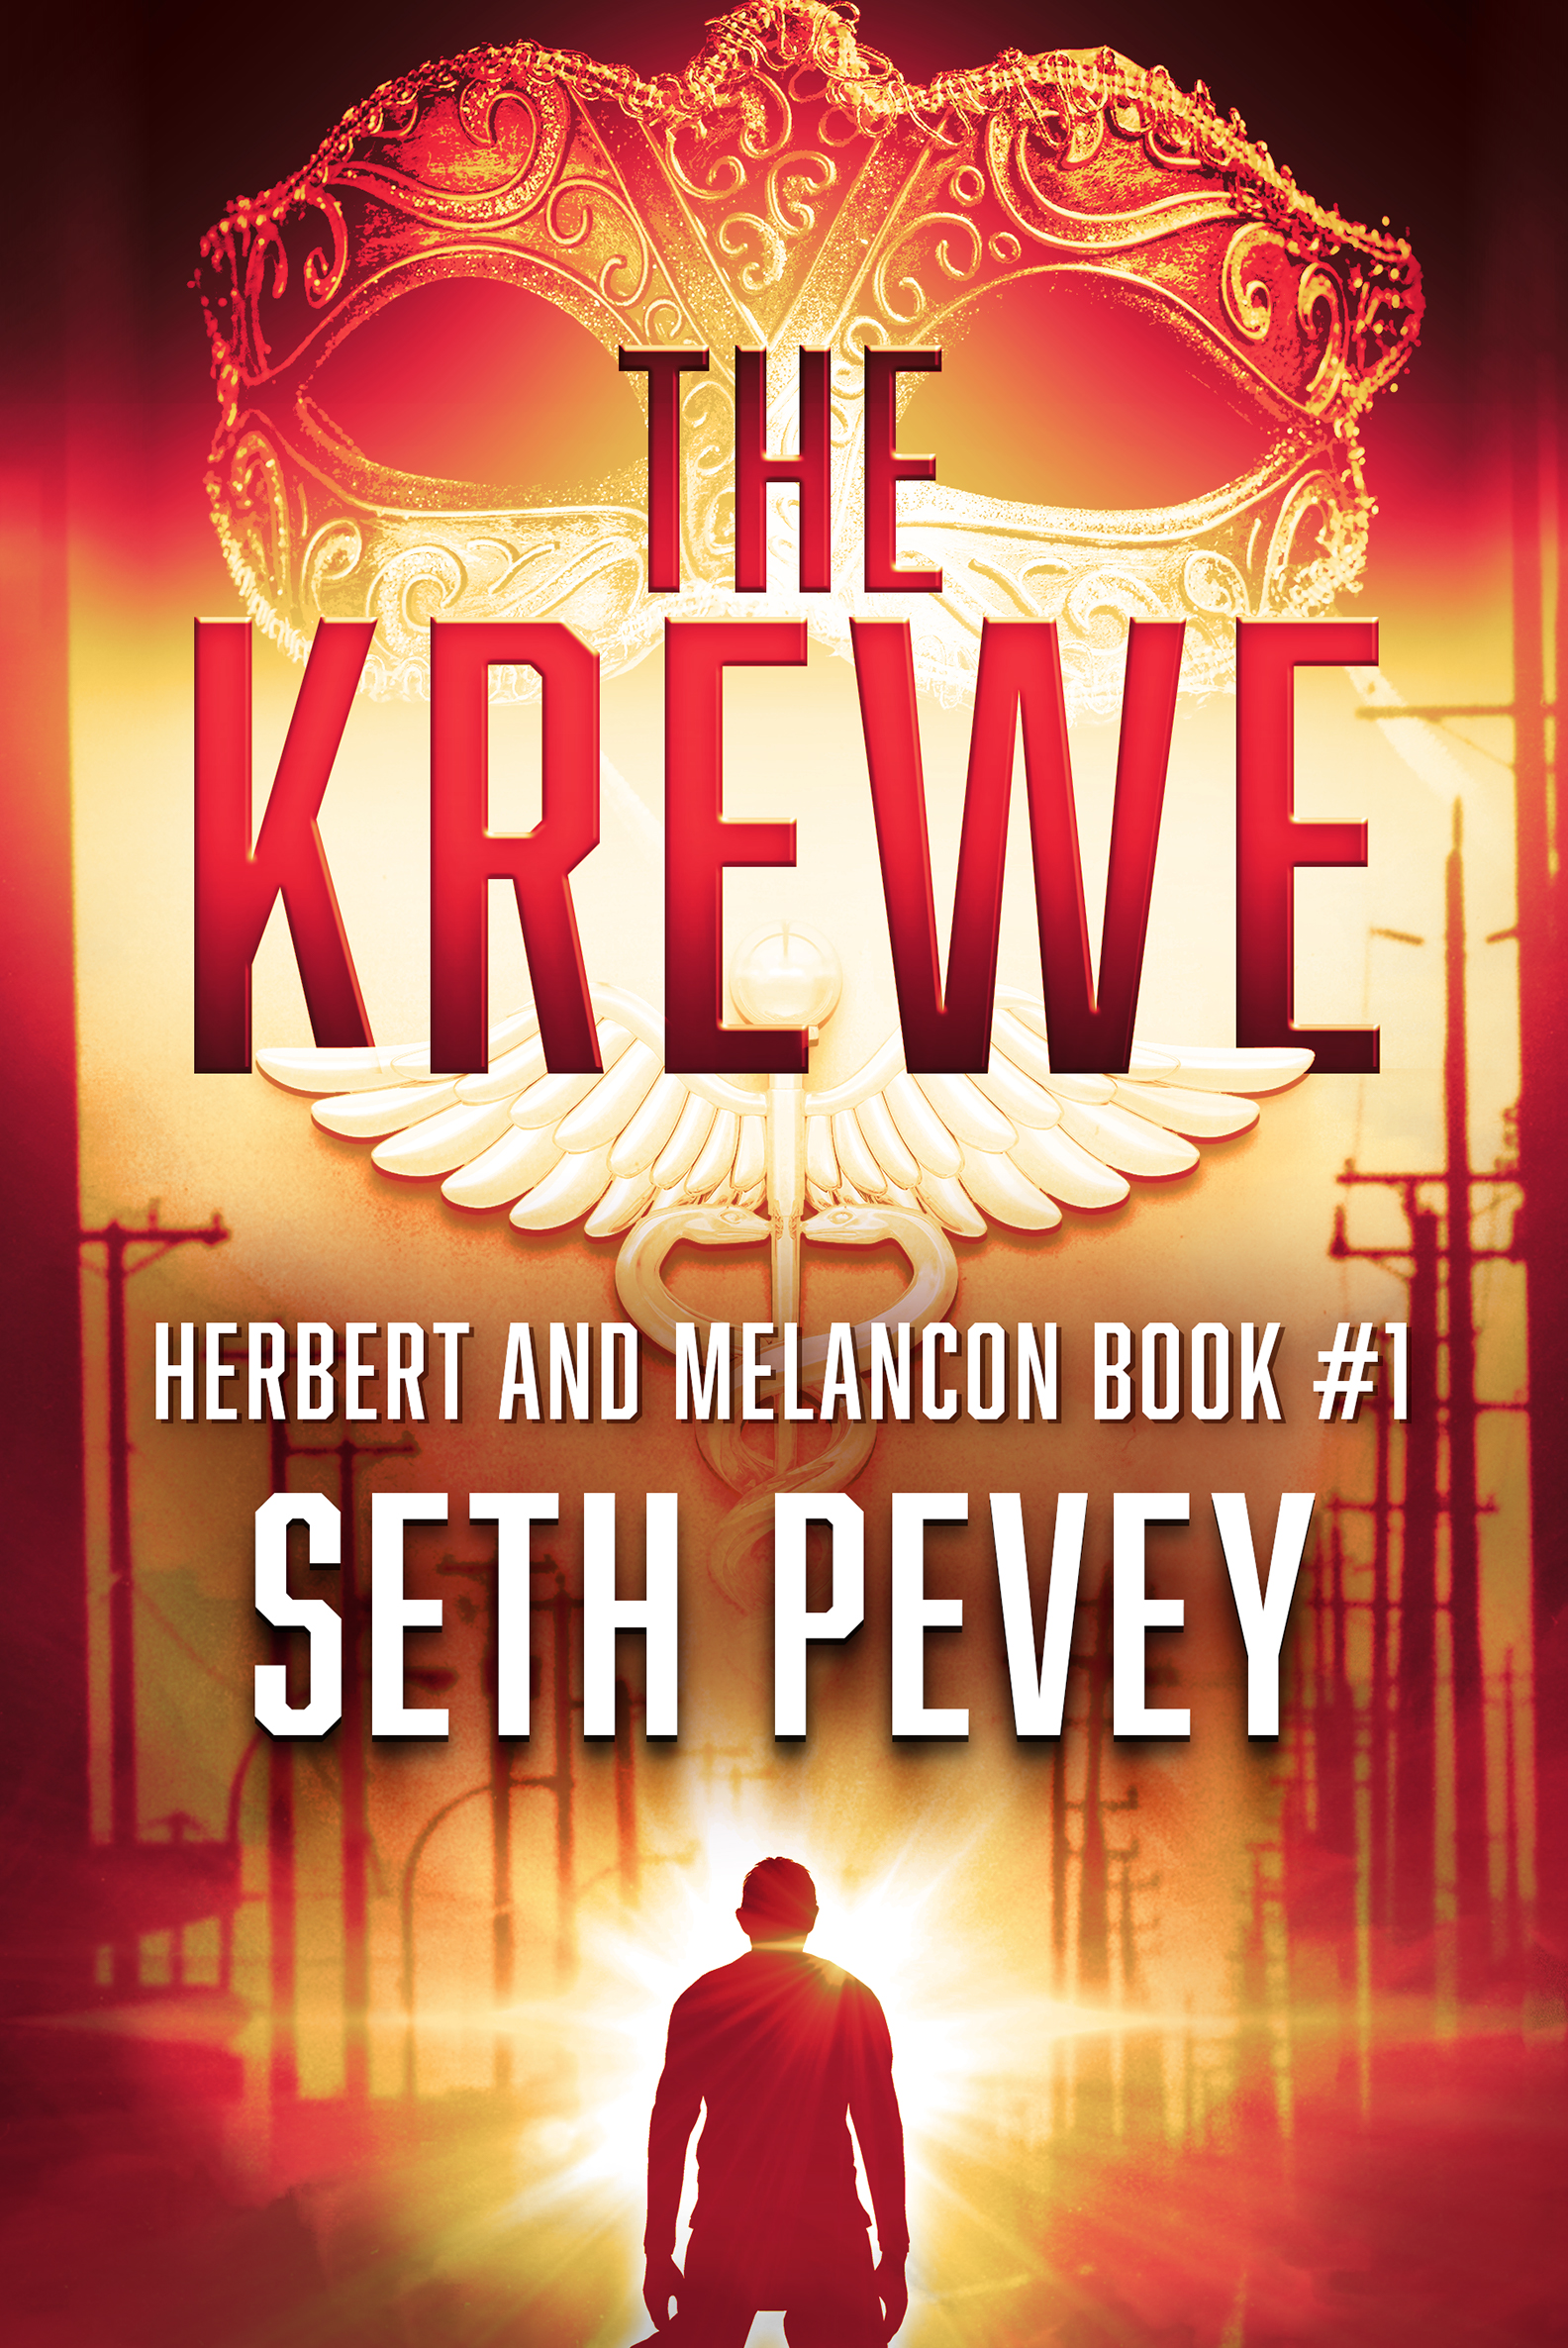 FREE: The Krewe by Seth pevey